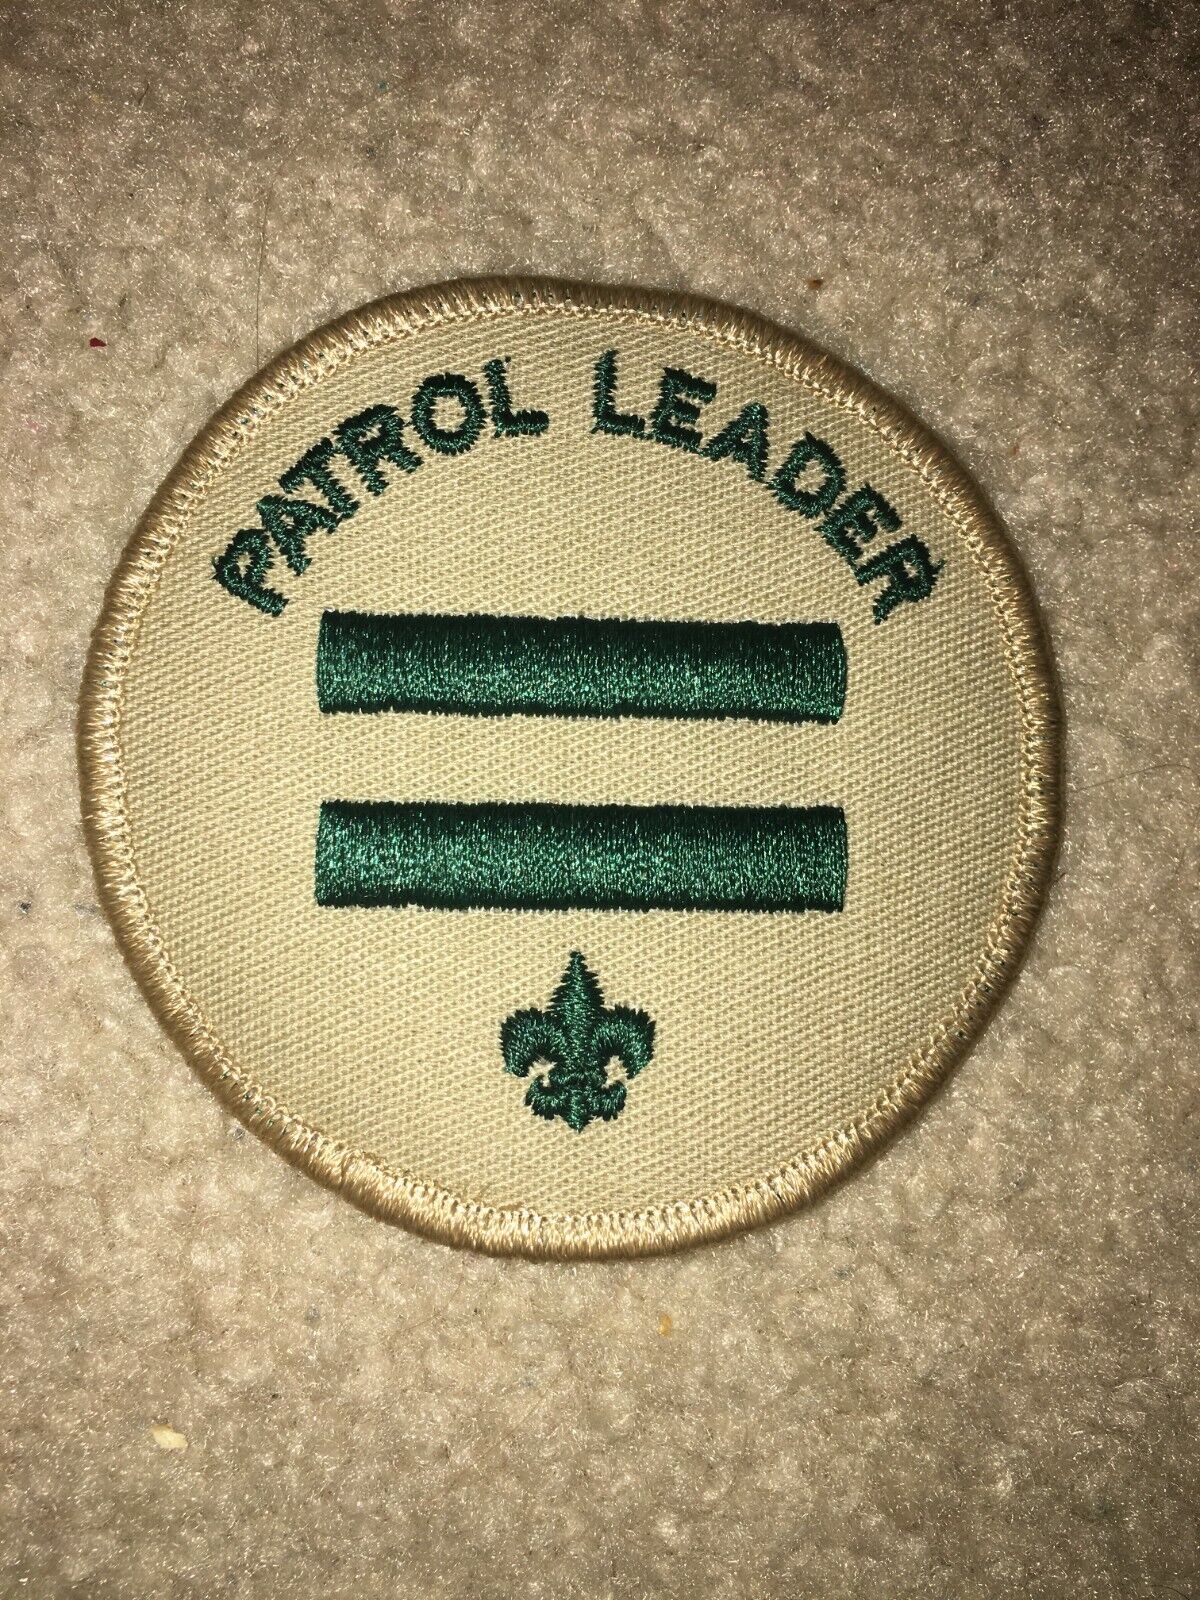 Boy Scout Bsa Patrol Leader 1989 - Current Position Tan Uniform Preowned Patch